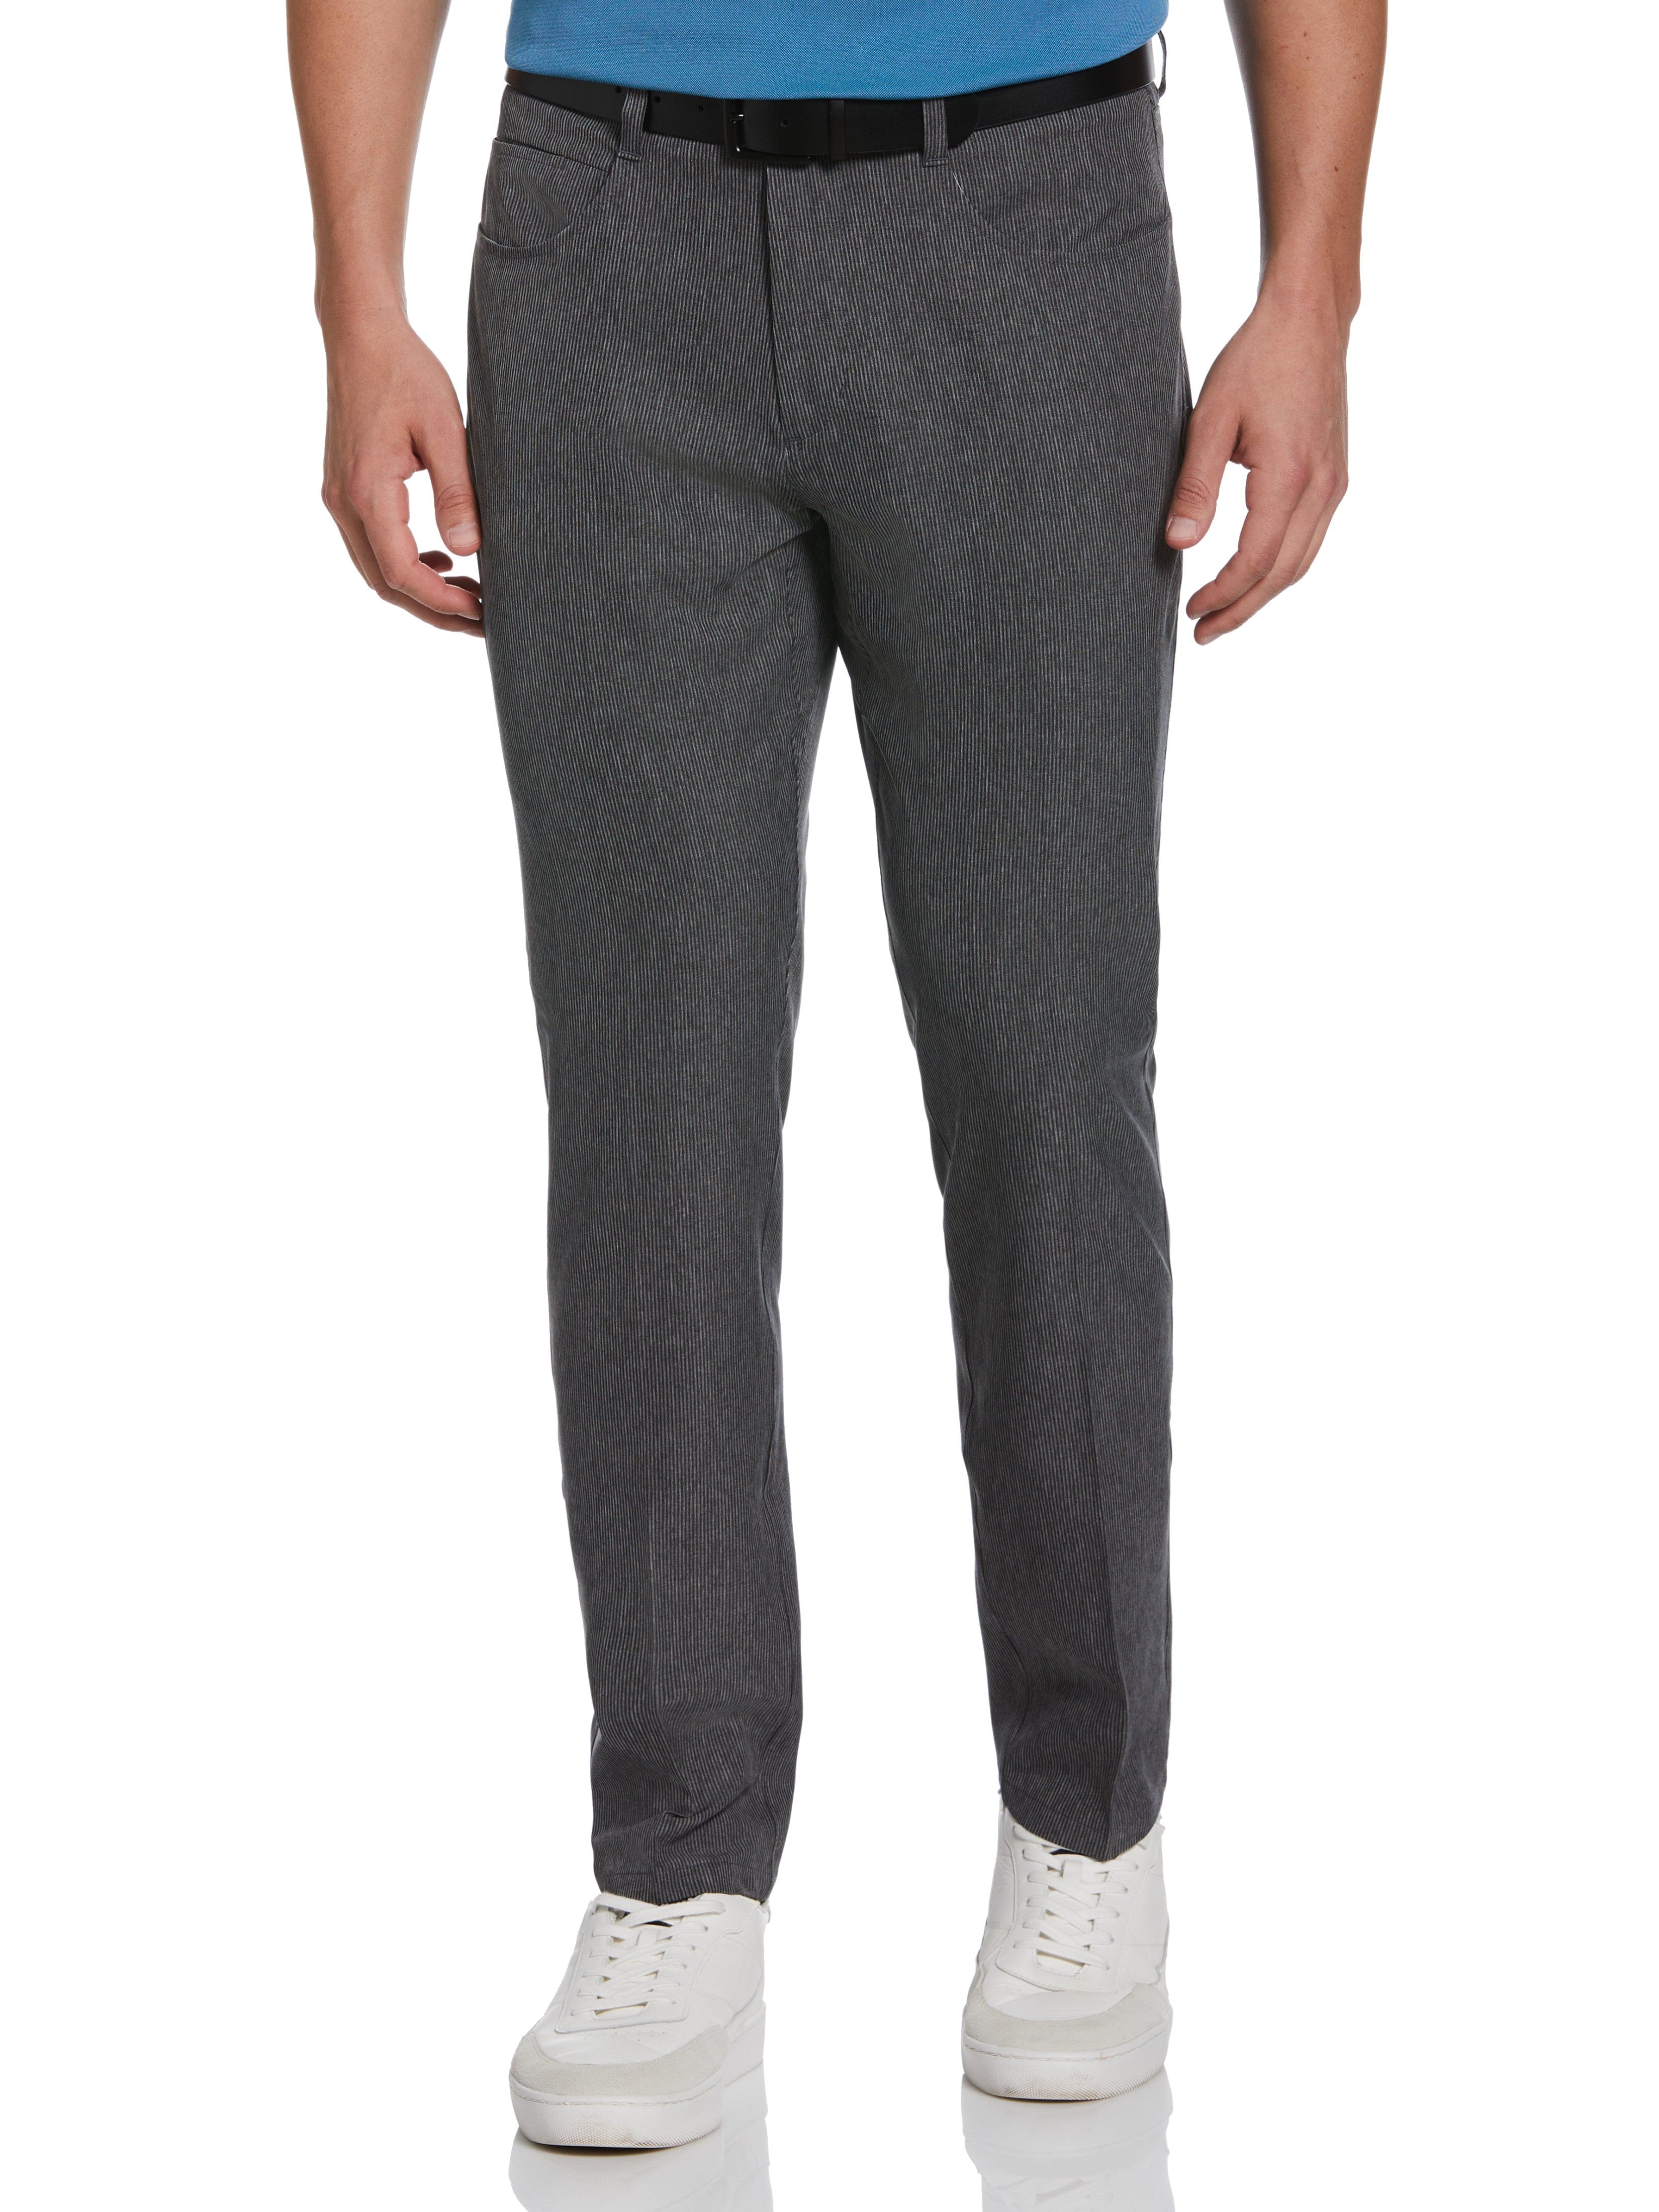 Original Penguin Mens Flat Front Fine Line Print Golf Pants, Size 36 x 32, Black, Polyester/Elastane | Golf Apparel Shop